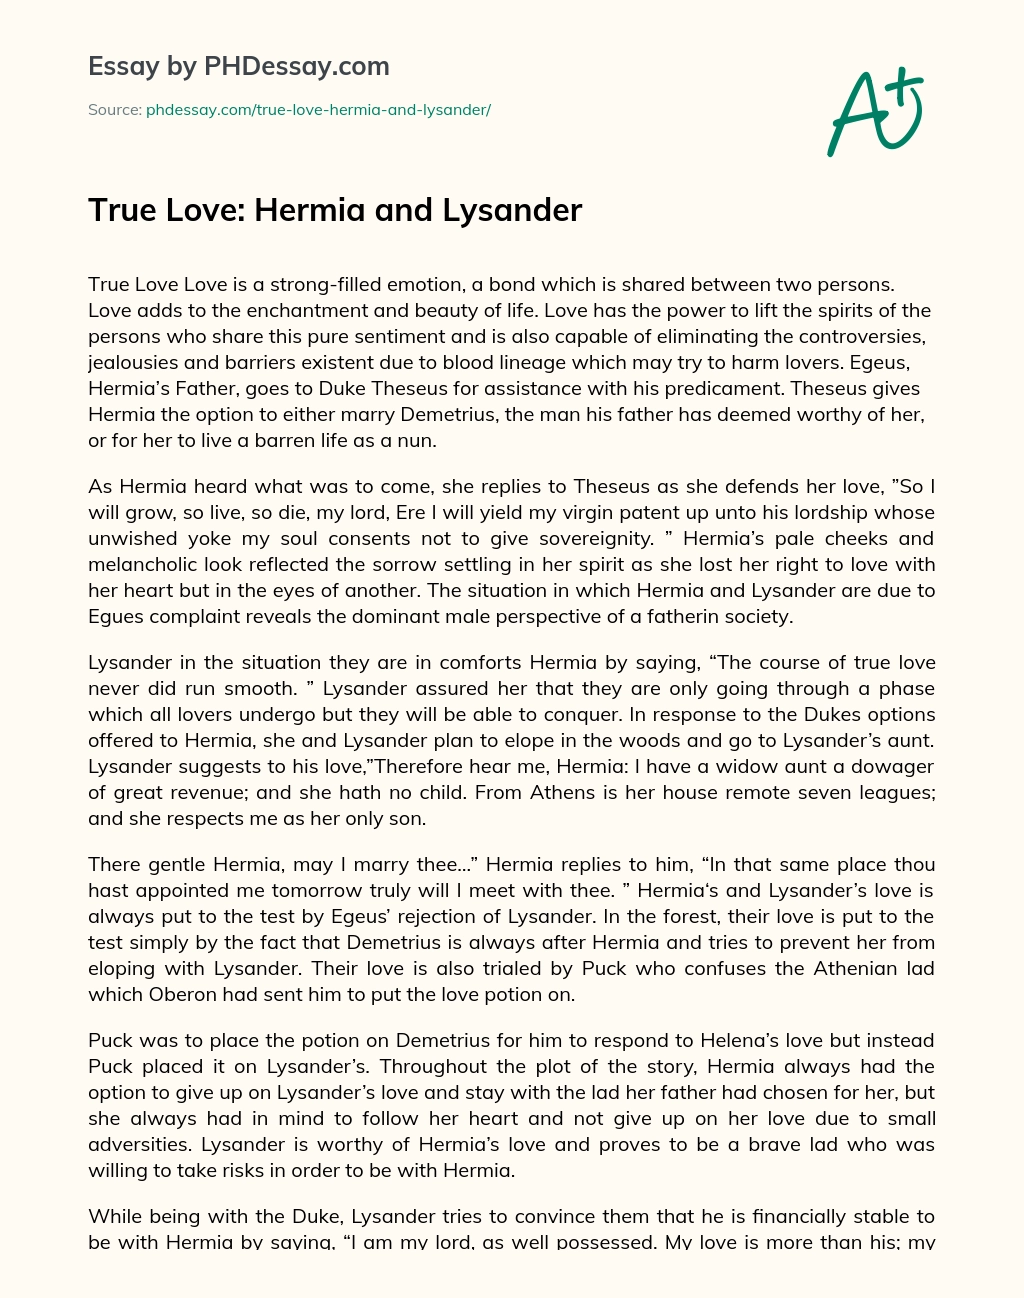 True Love: Hermia and Lysander essay